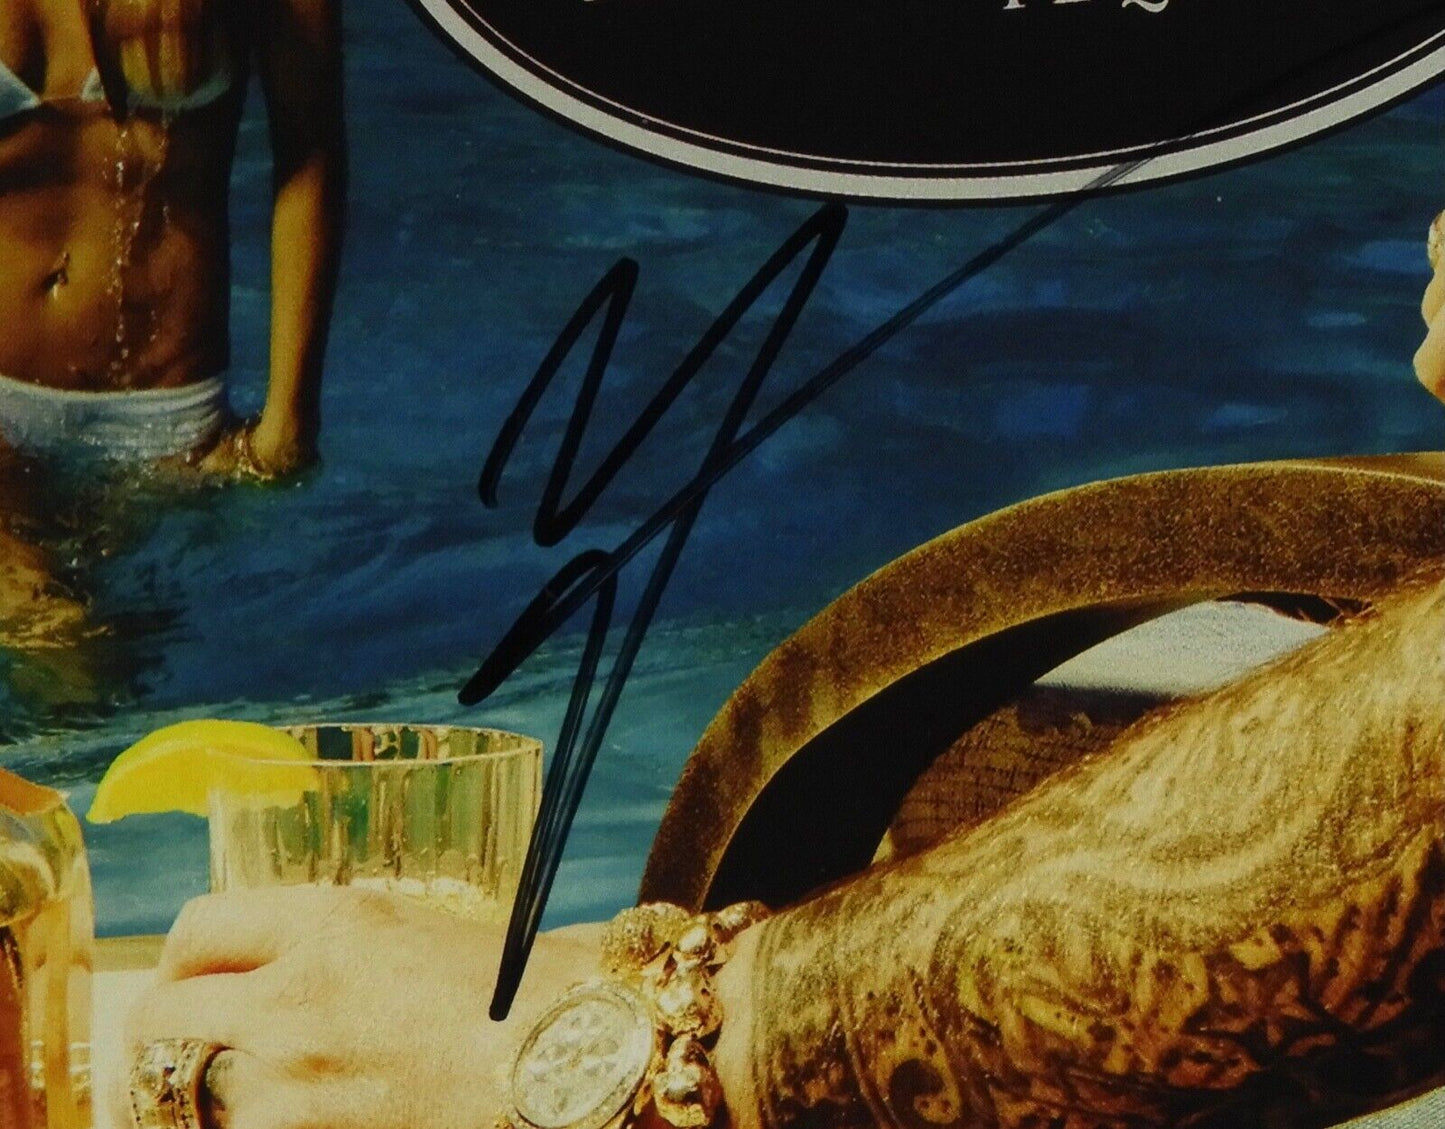 Vince Neil JSA COA signed autograph CD Booklet Motley Crue Tattoos & Tequila